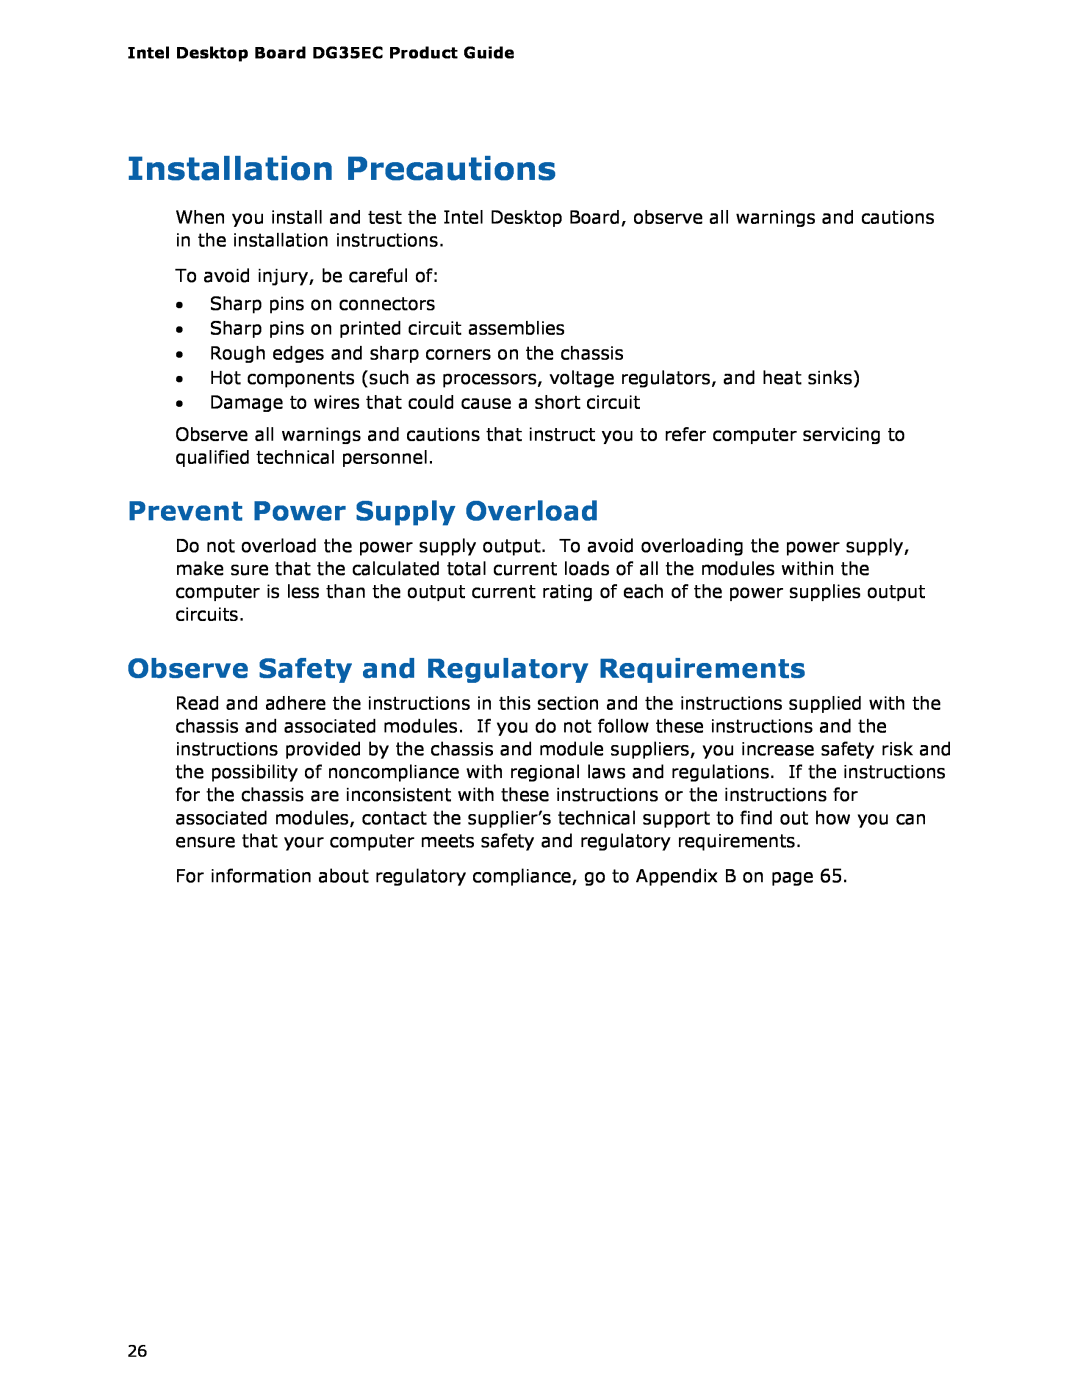 Intel Intel Desktop Board, DG35EC manual Installation Precautions, Prevent Power Supply Overload 